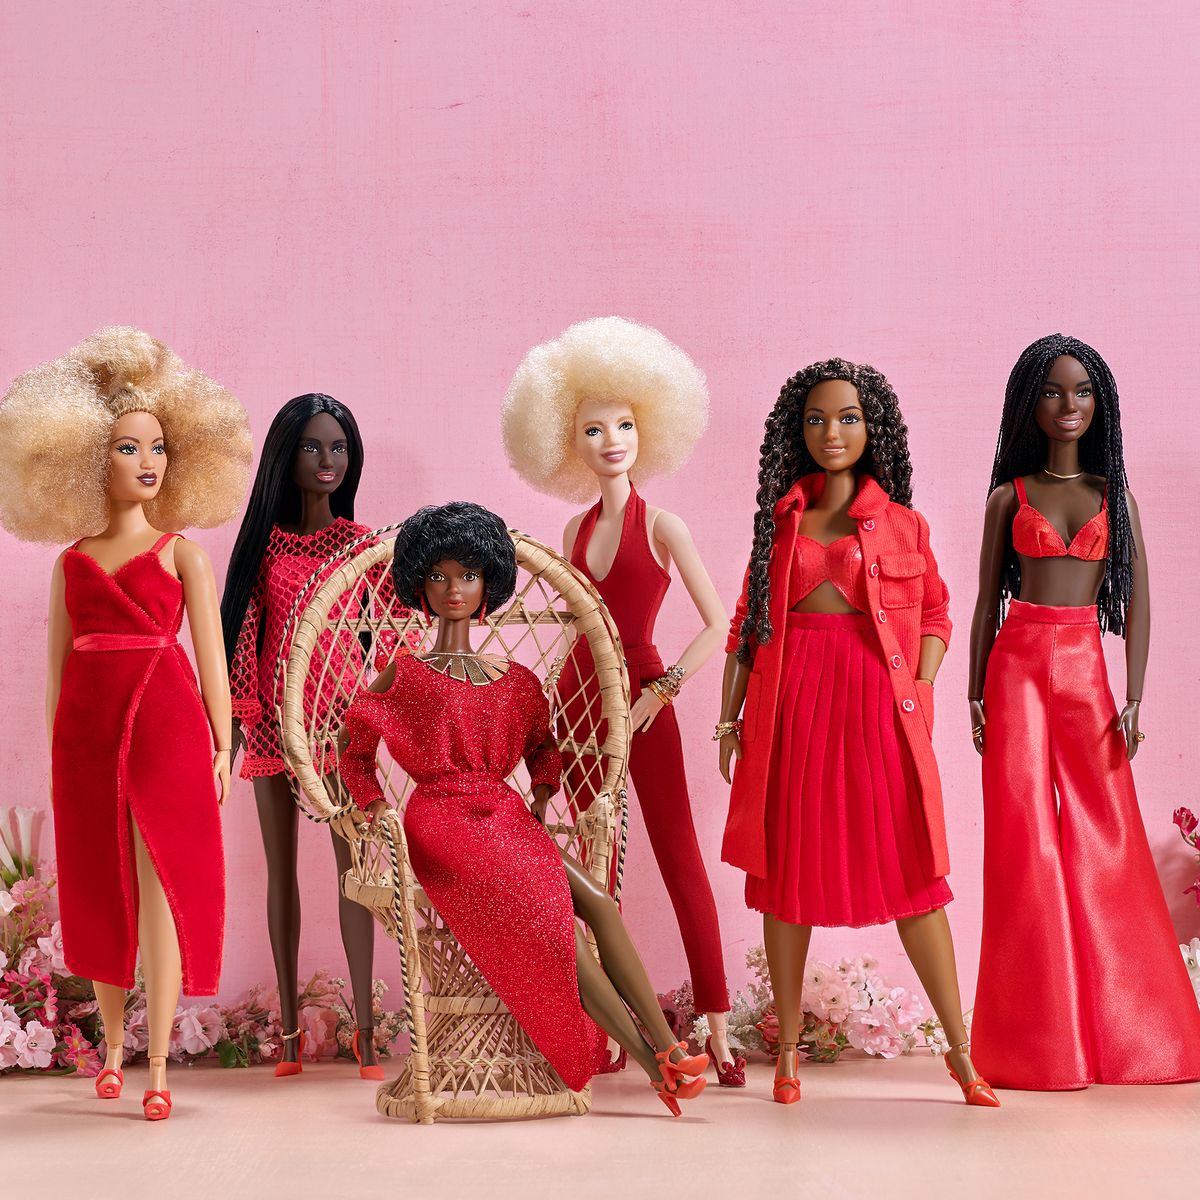 Shiona Turini's Black Barbie Collection Celebrates Black Beauty